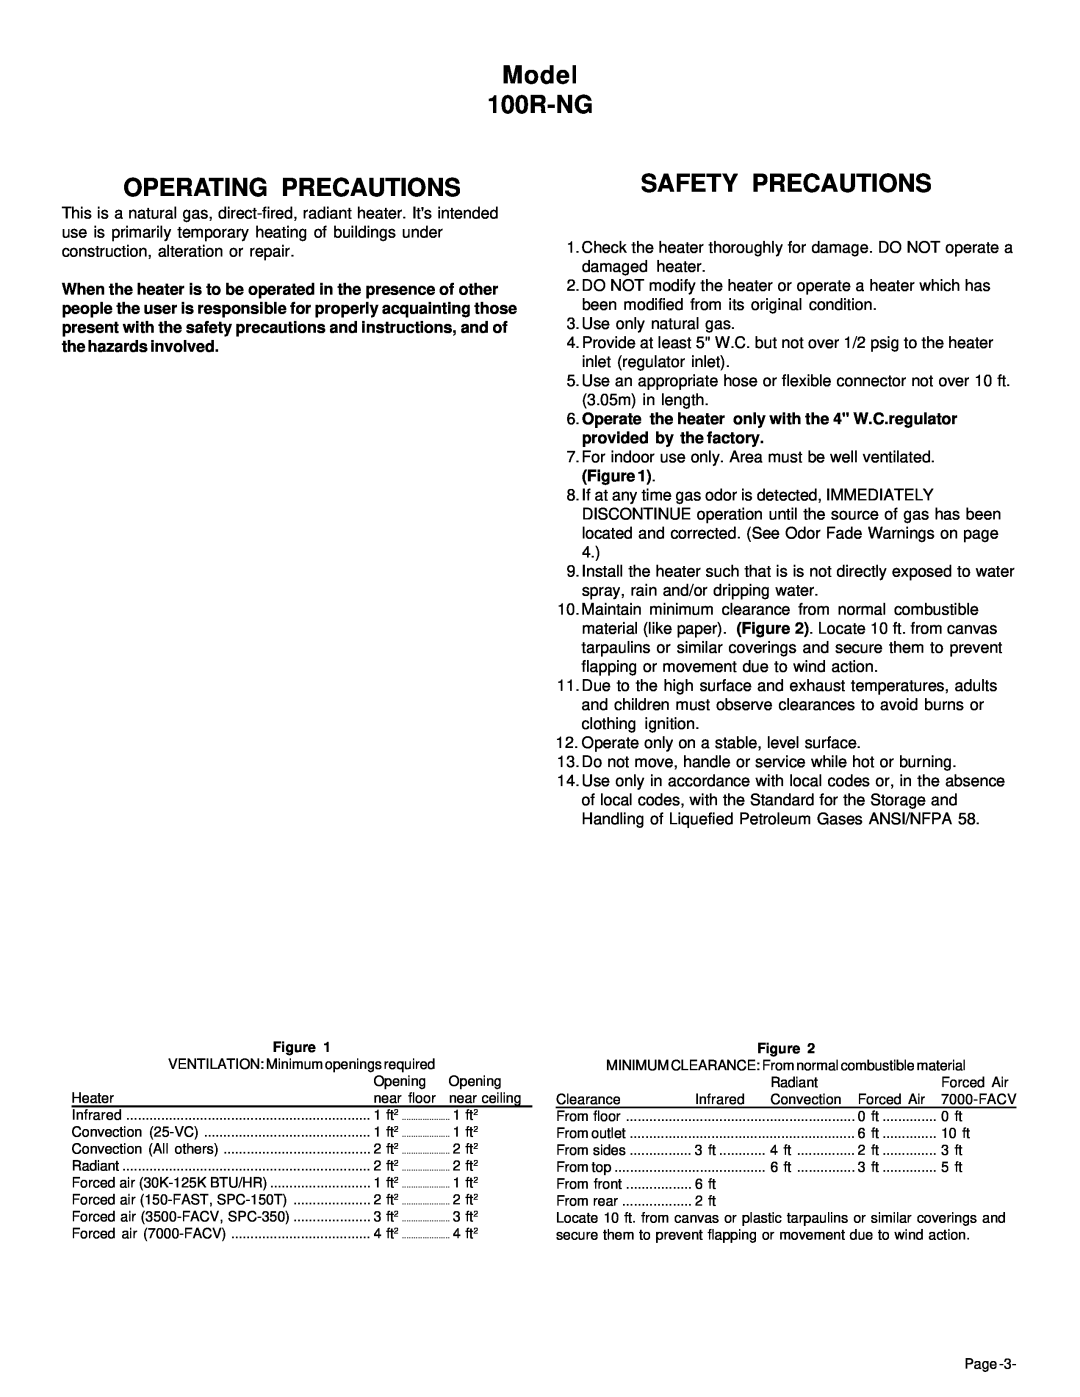 Universal owner manual Operating Precautions, Safety Precautions, Model 100R-NG 